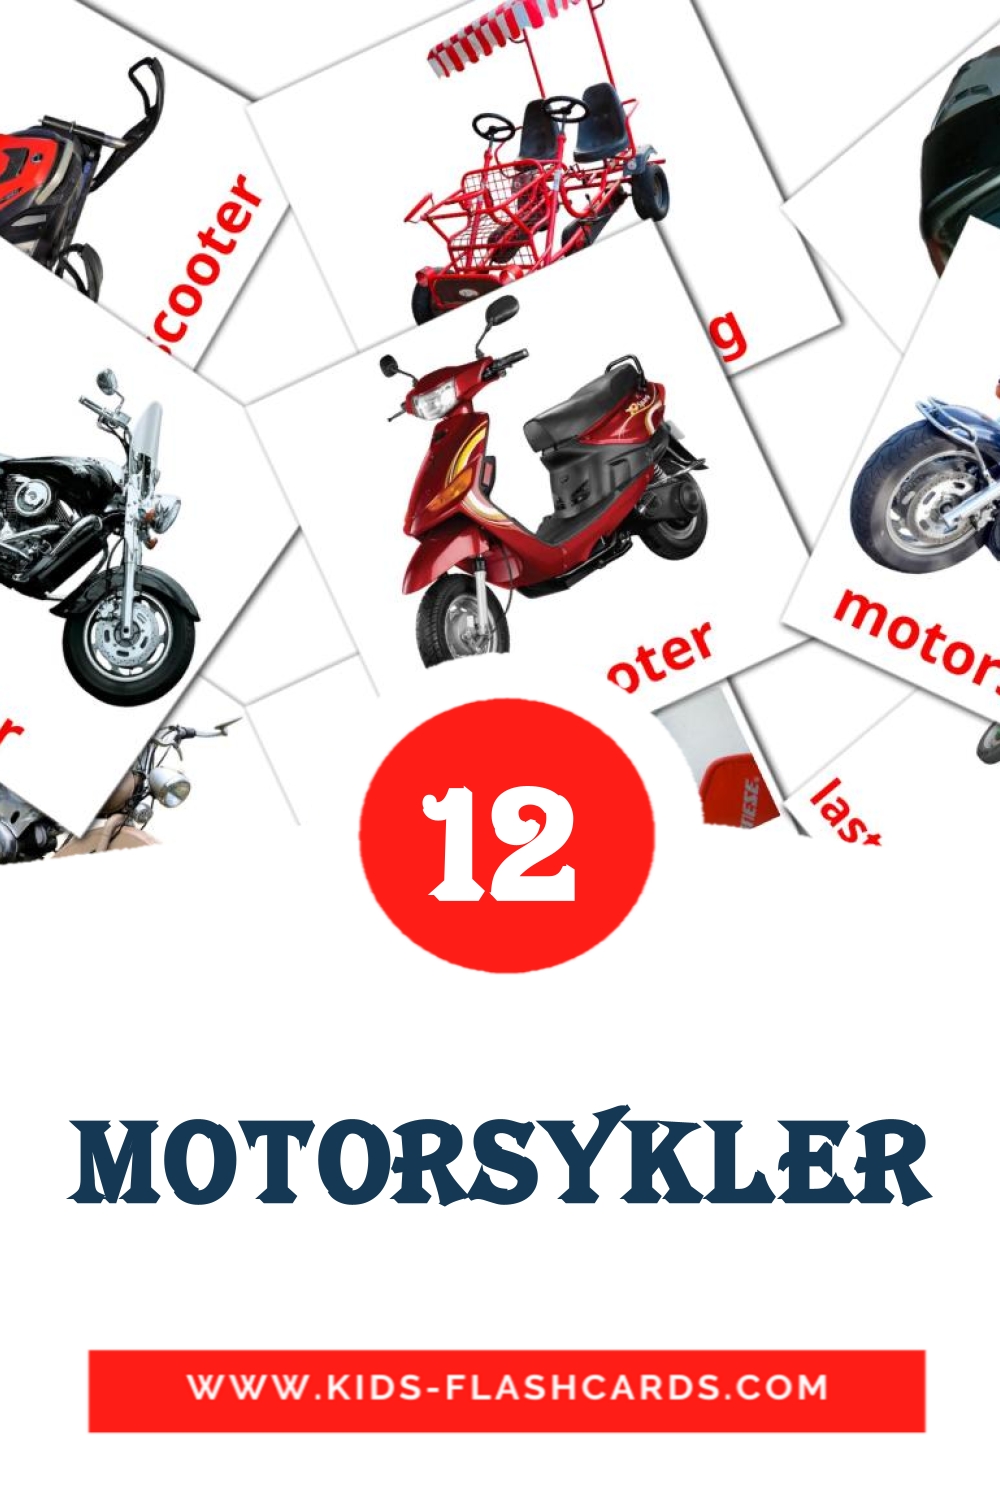 12 carte illustrate di Motorsykler per la scuola materna in norvegese